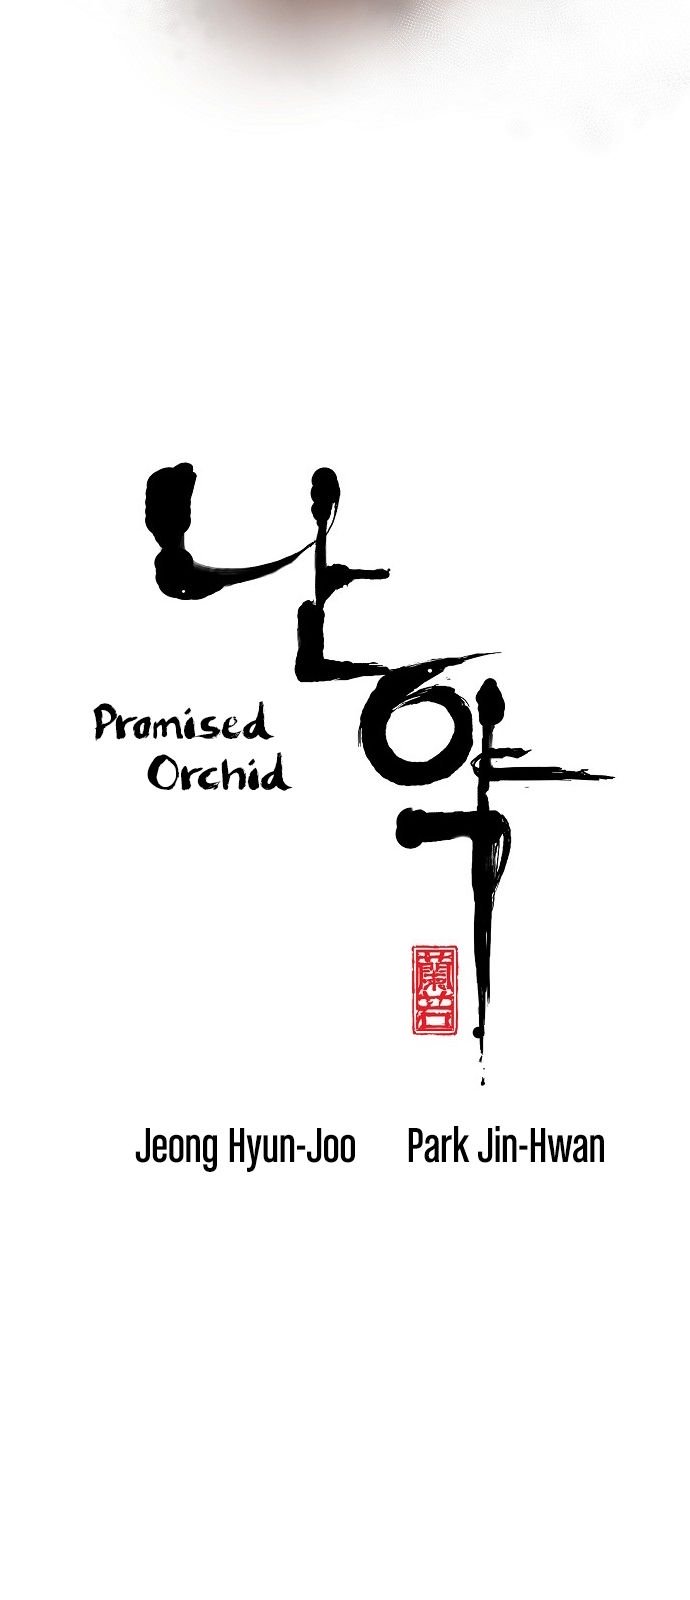 Promised Orchid - MangaTyrant